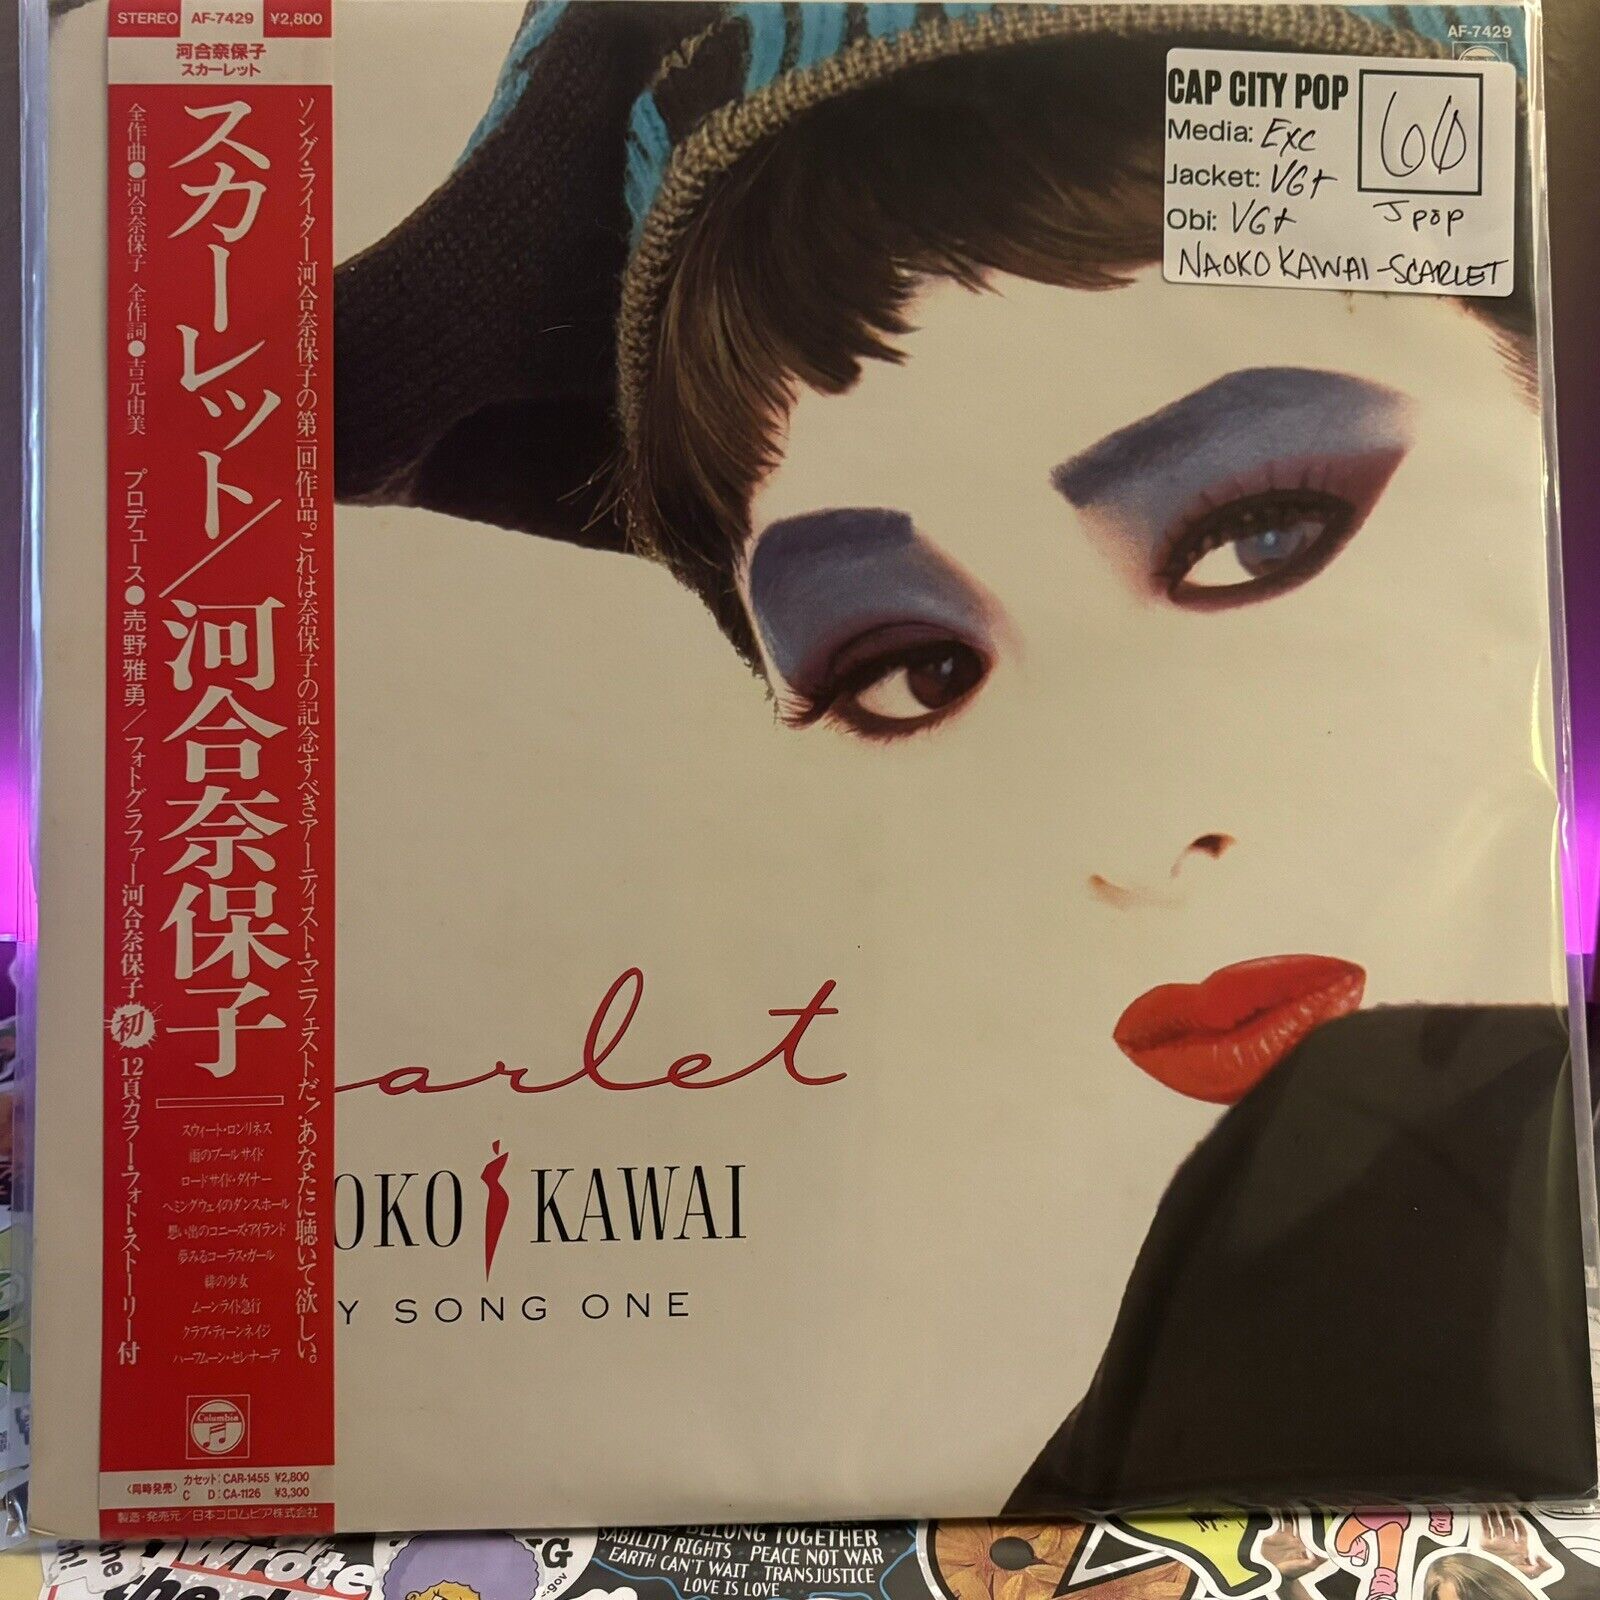 Naoko Kawai - Scarlet 1986 Vinyl LP